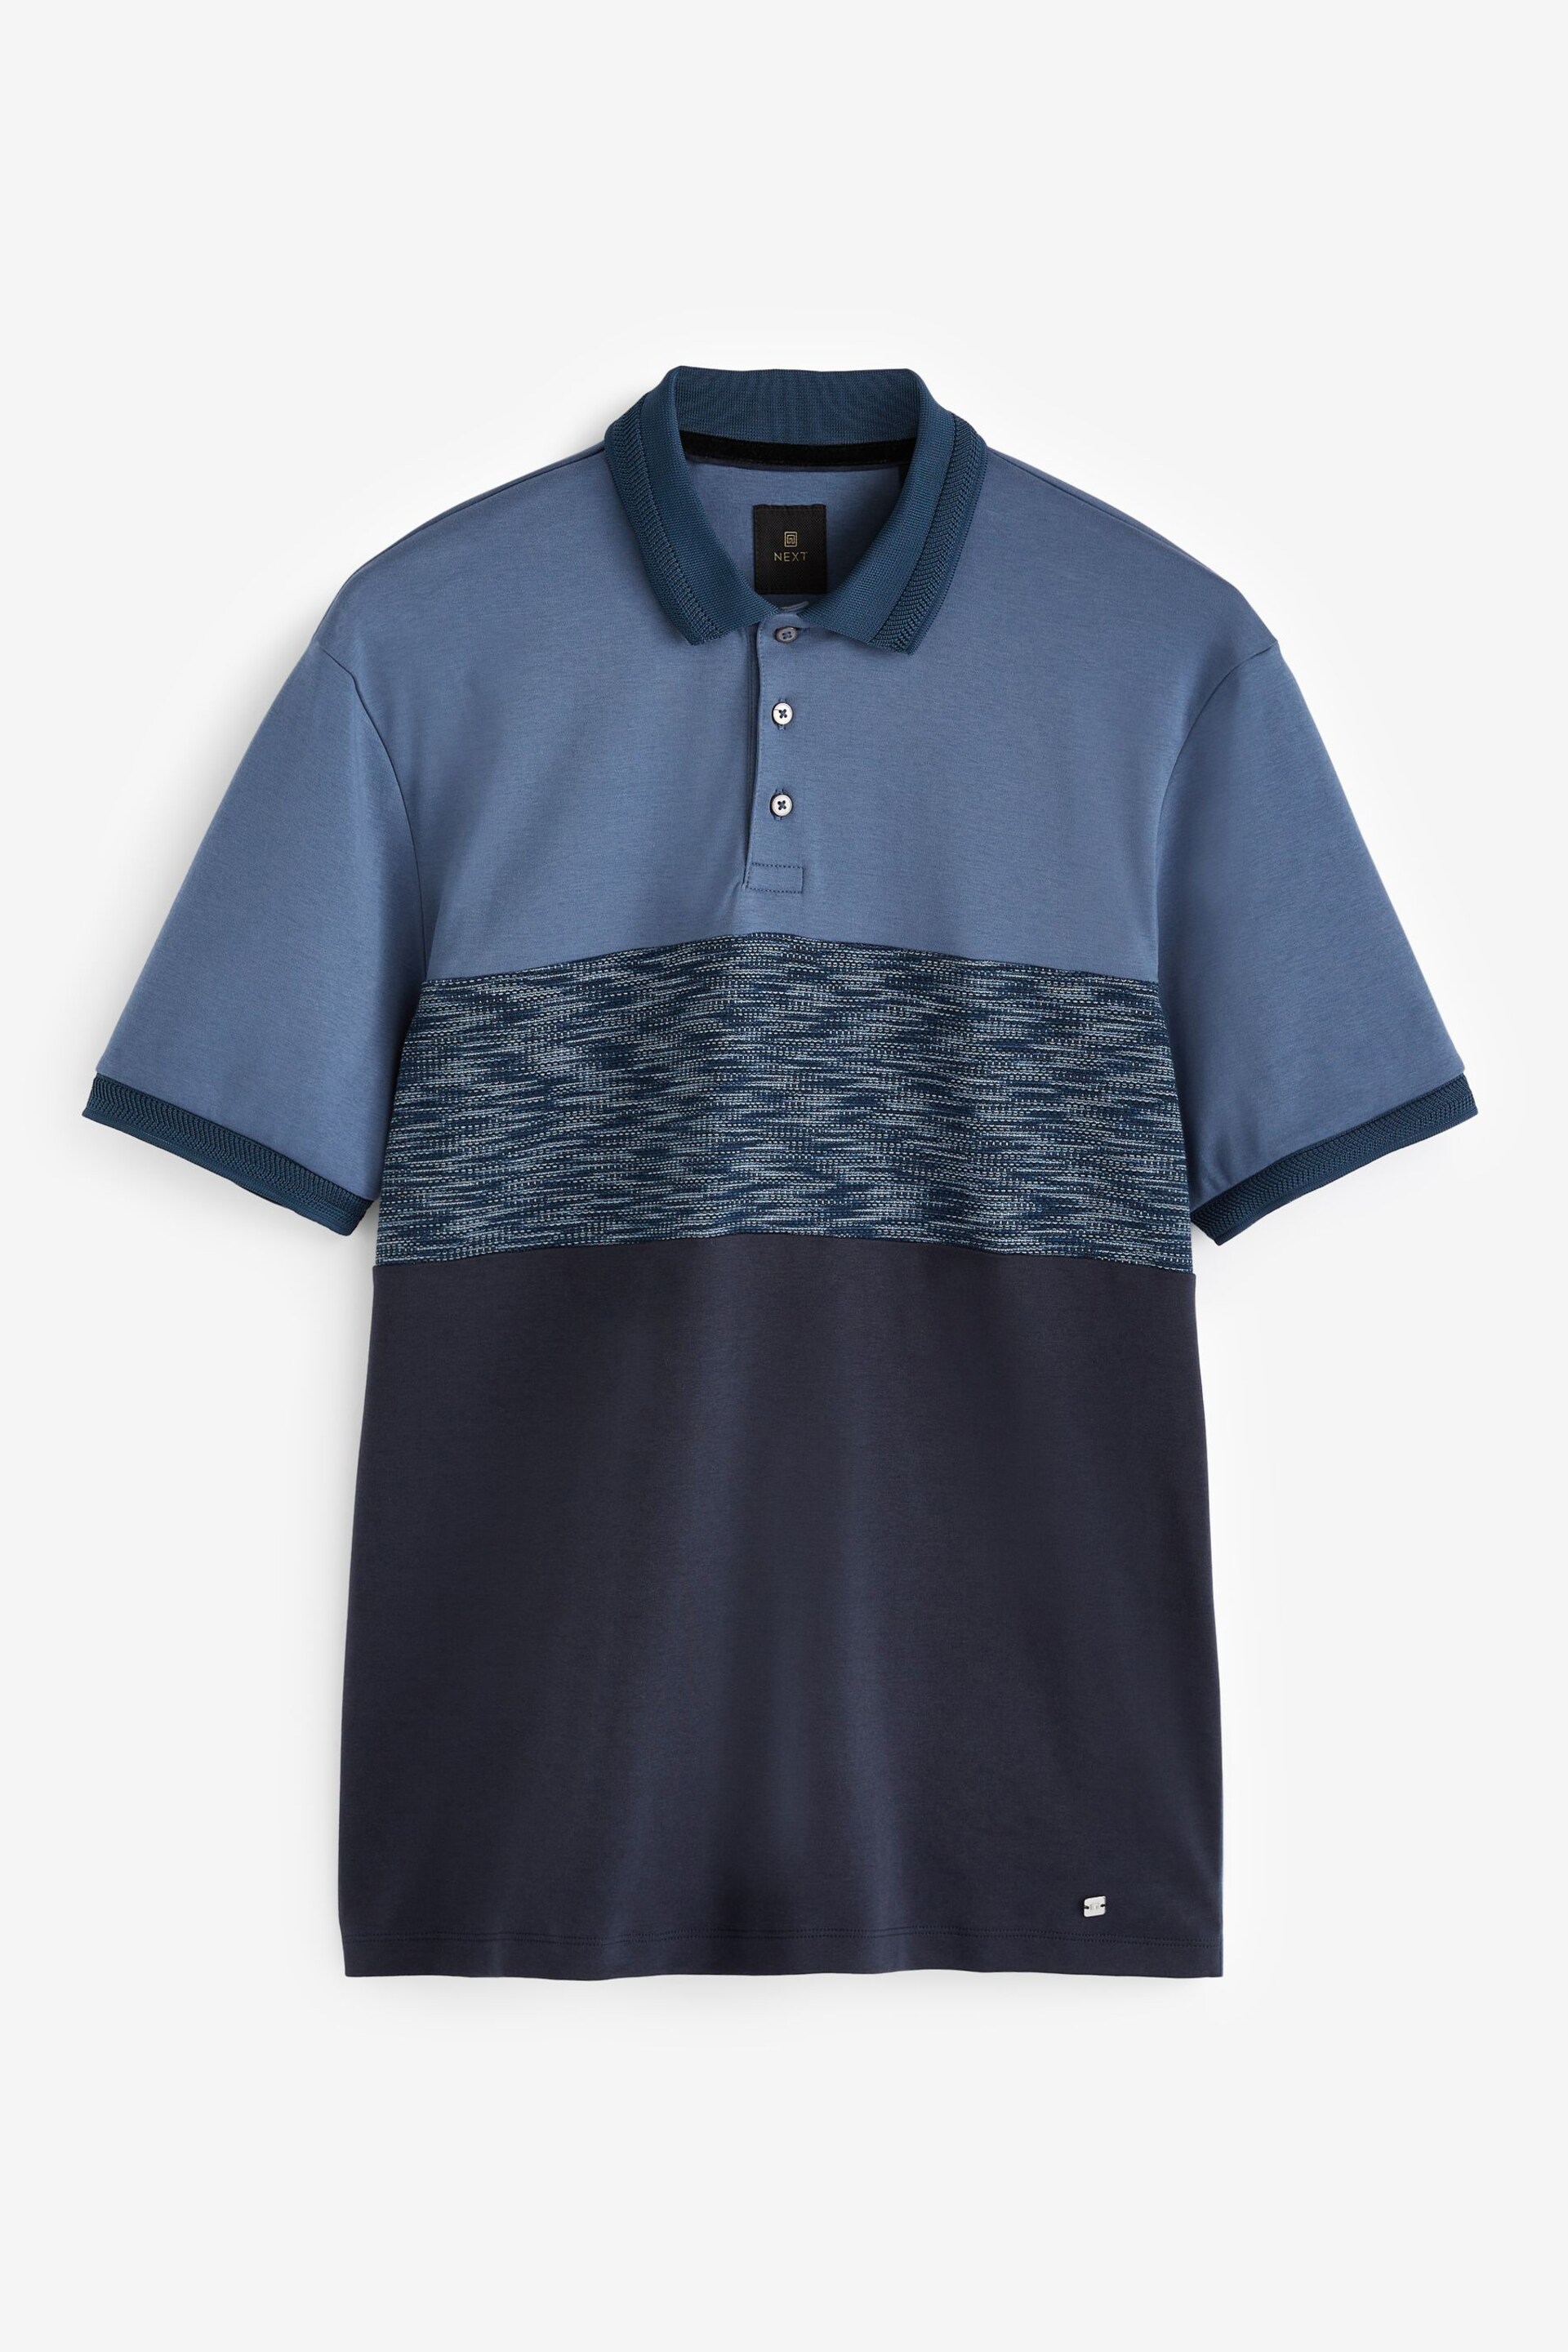 Blue Inject Colourblock Polo Shirt - Image 6 of 8